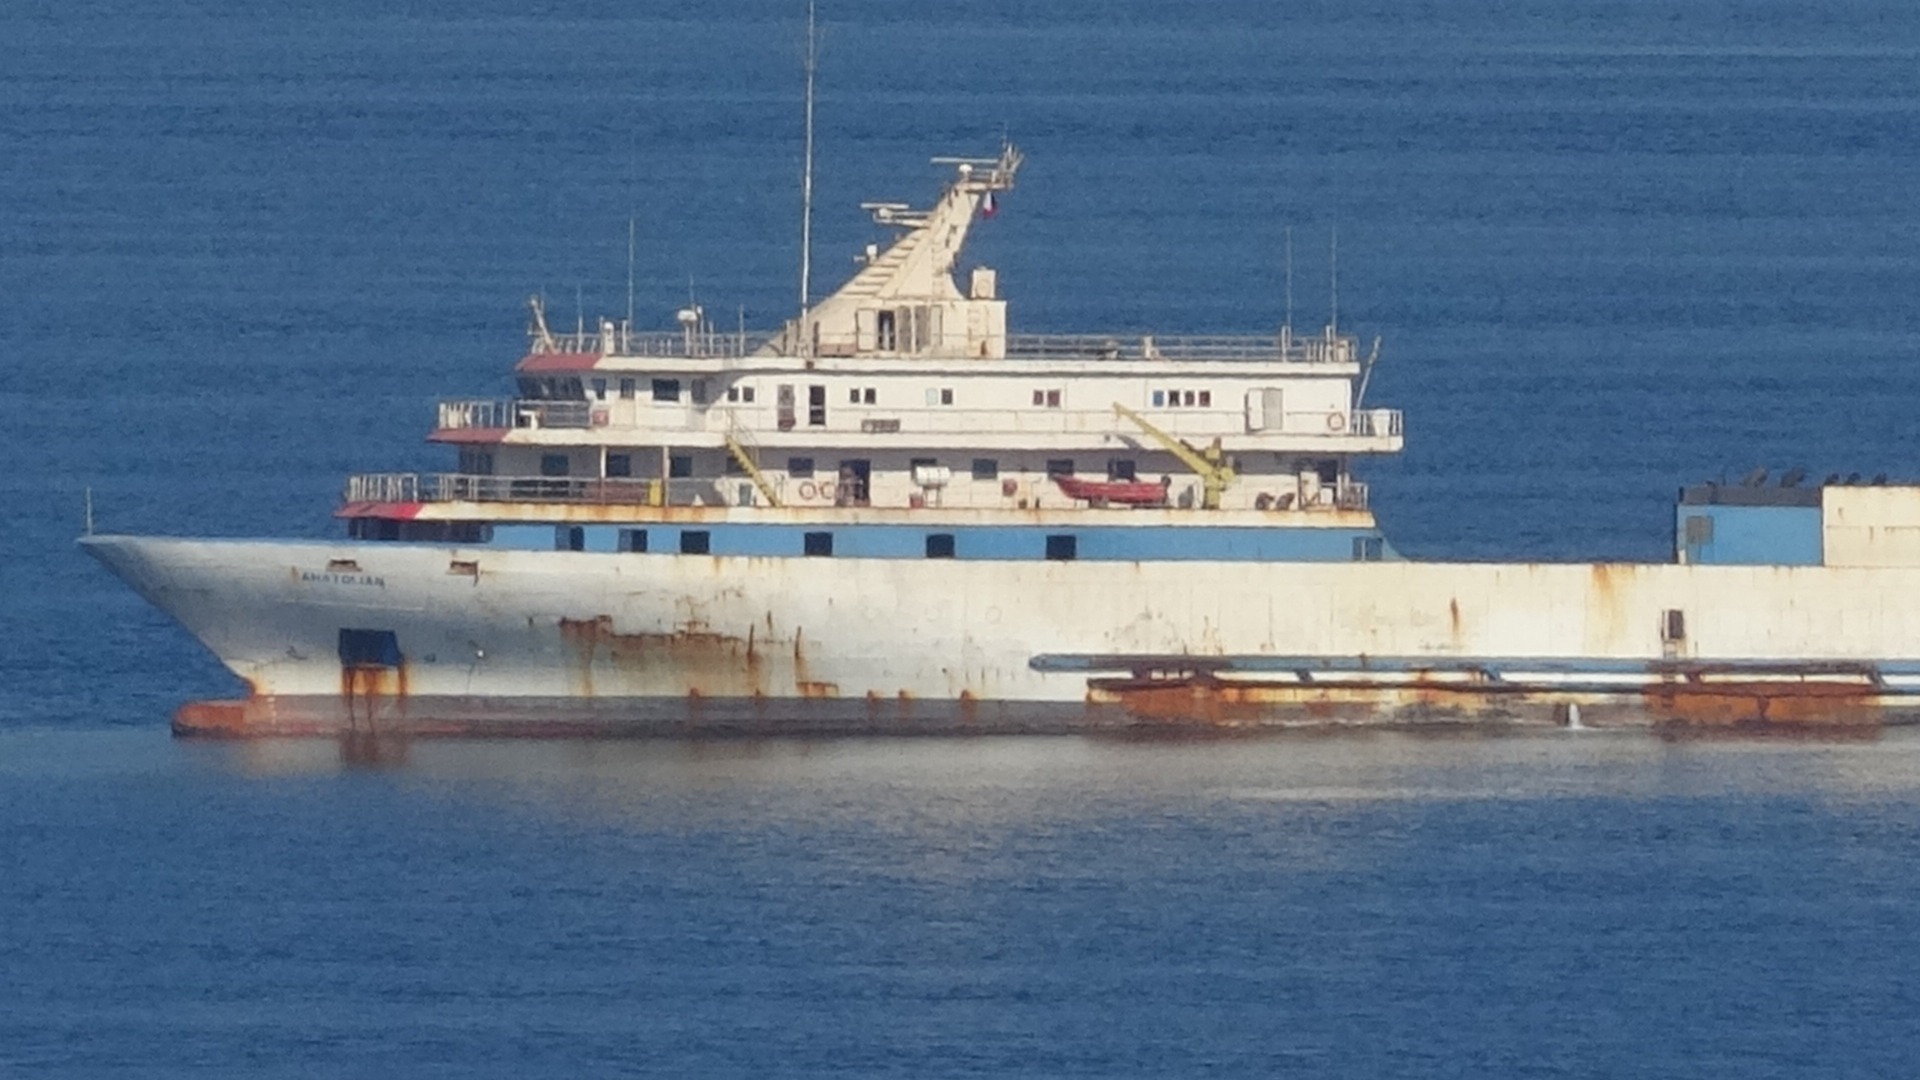 Yunanistan'ın saldırdığı gemi Mavi Marmara çıktı 4